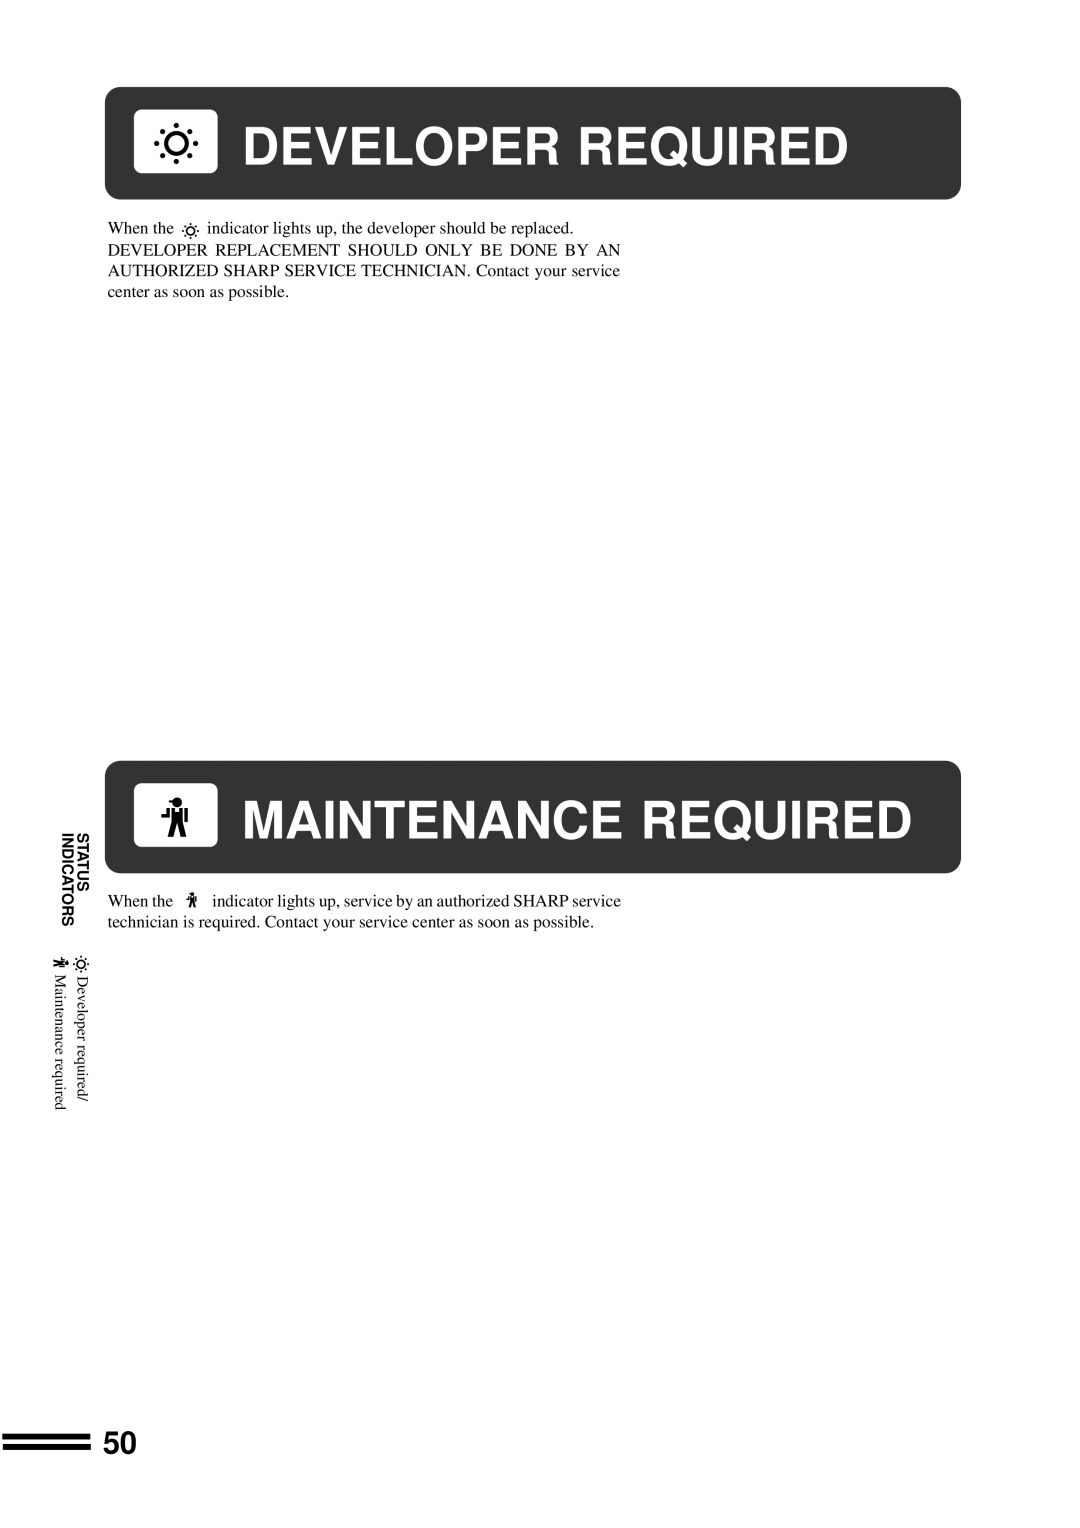 Sharp AR-207 Developer Required, Maintenance Required, Indicators, Status, Maintenance required, Developer required 